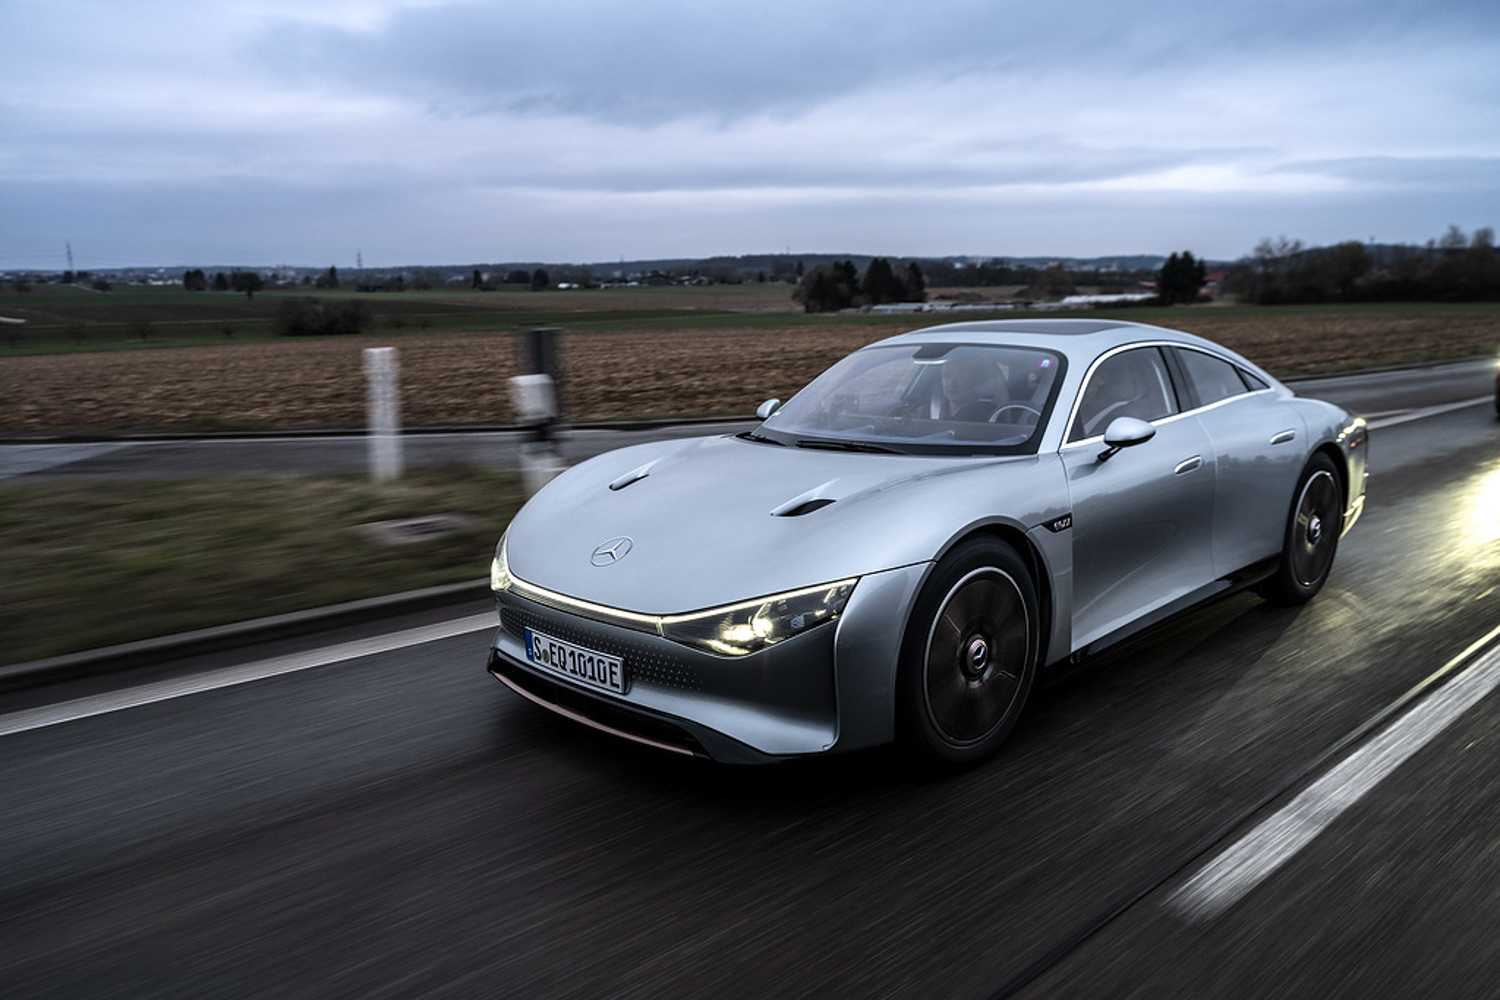 Car News | Mercedes-Benz Vision EQXX has 1,000km ability | CompleteCar.ie